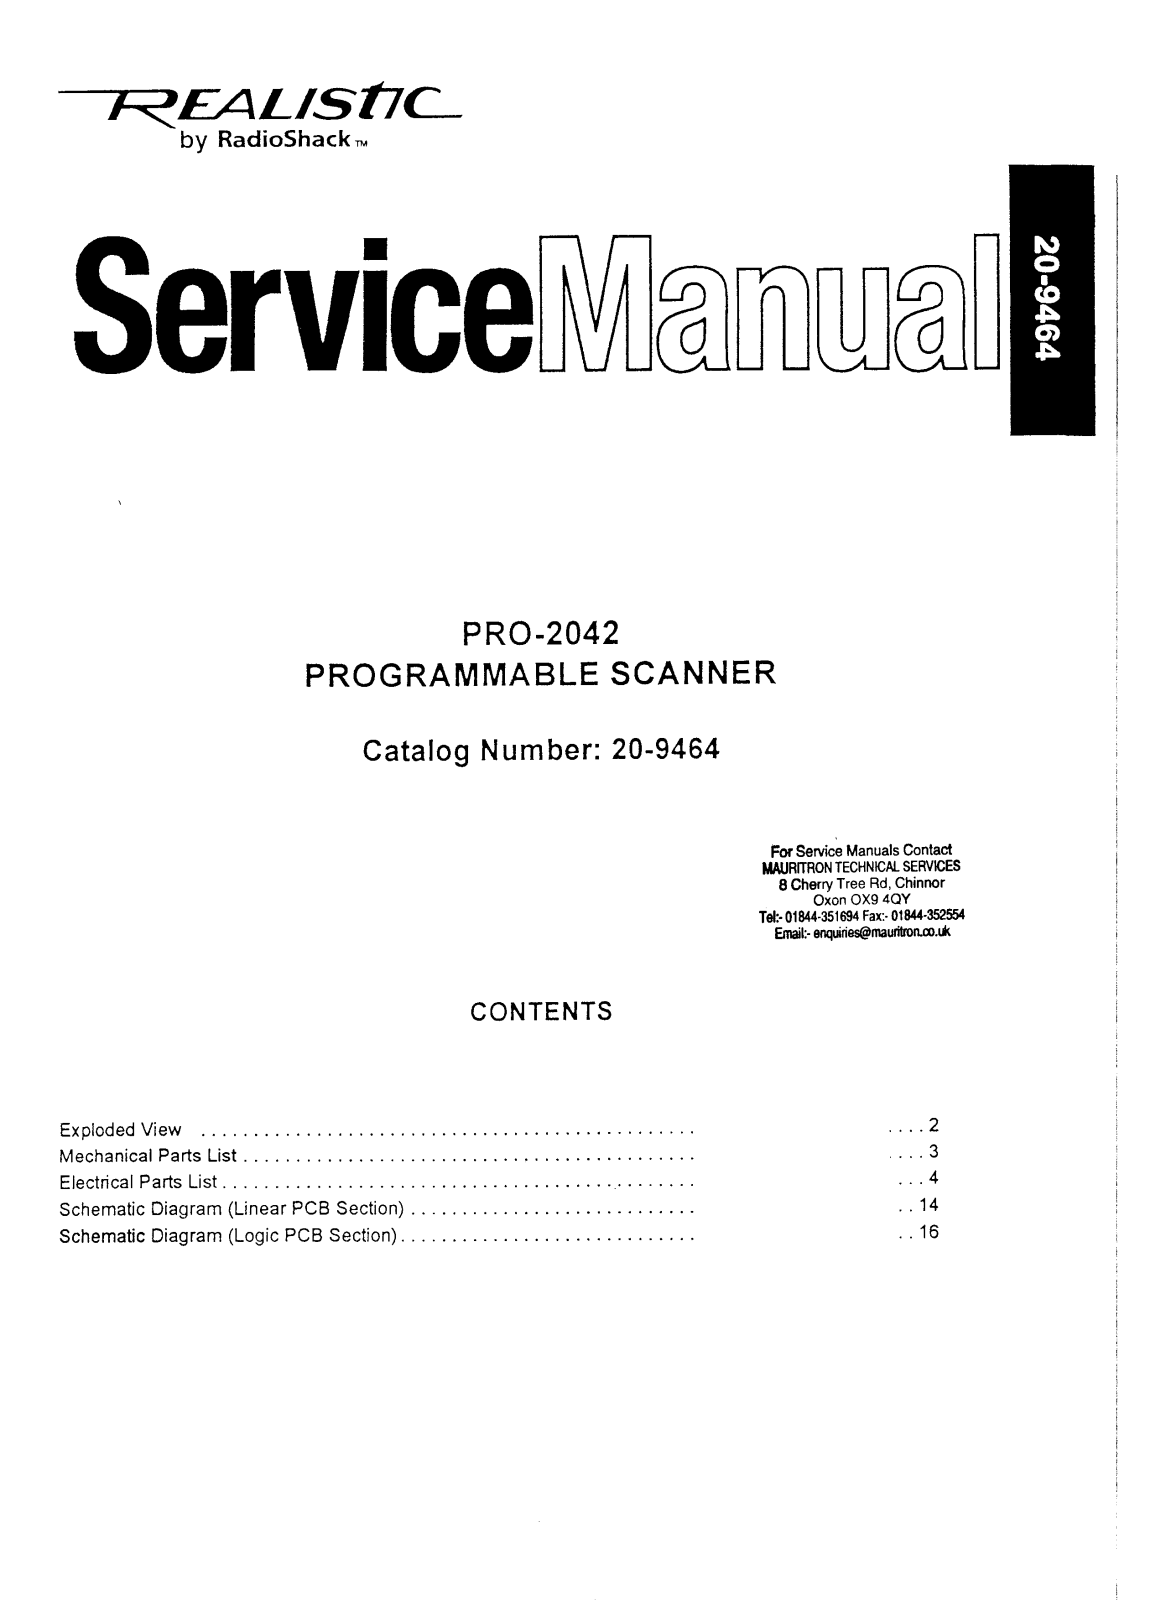 RadioShack PRO-2042, 20-9464 Service Manual